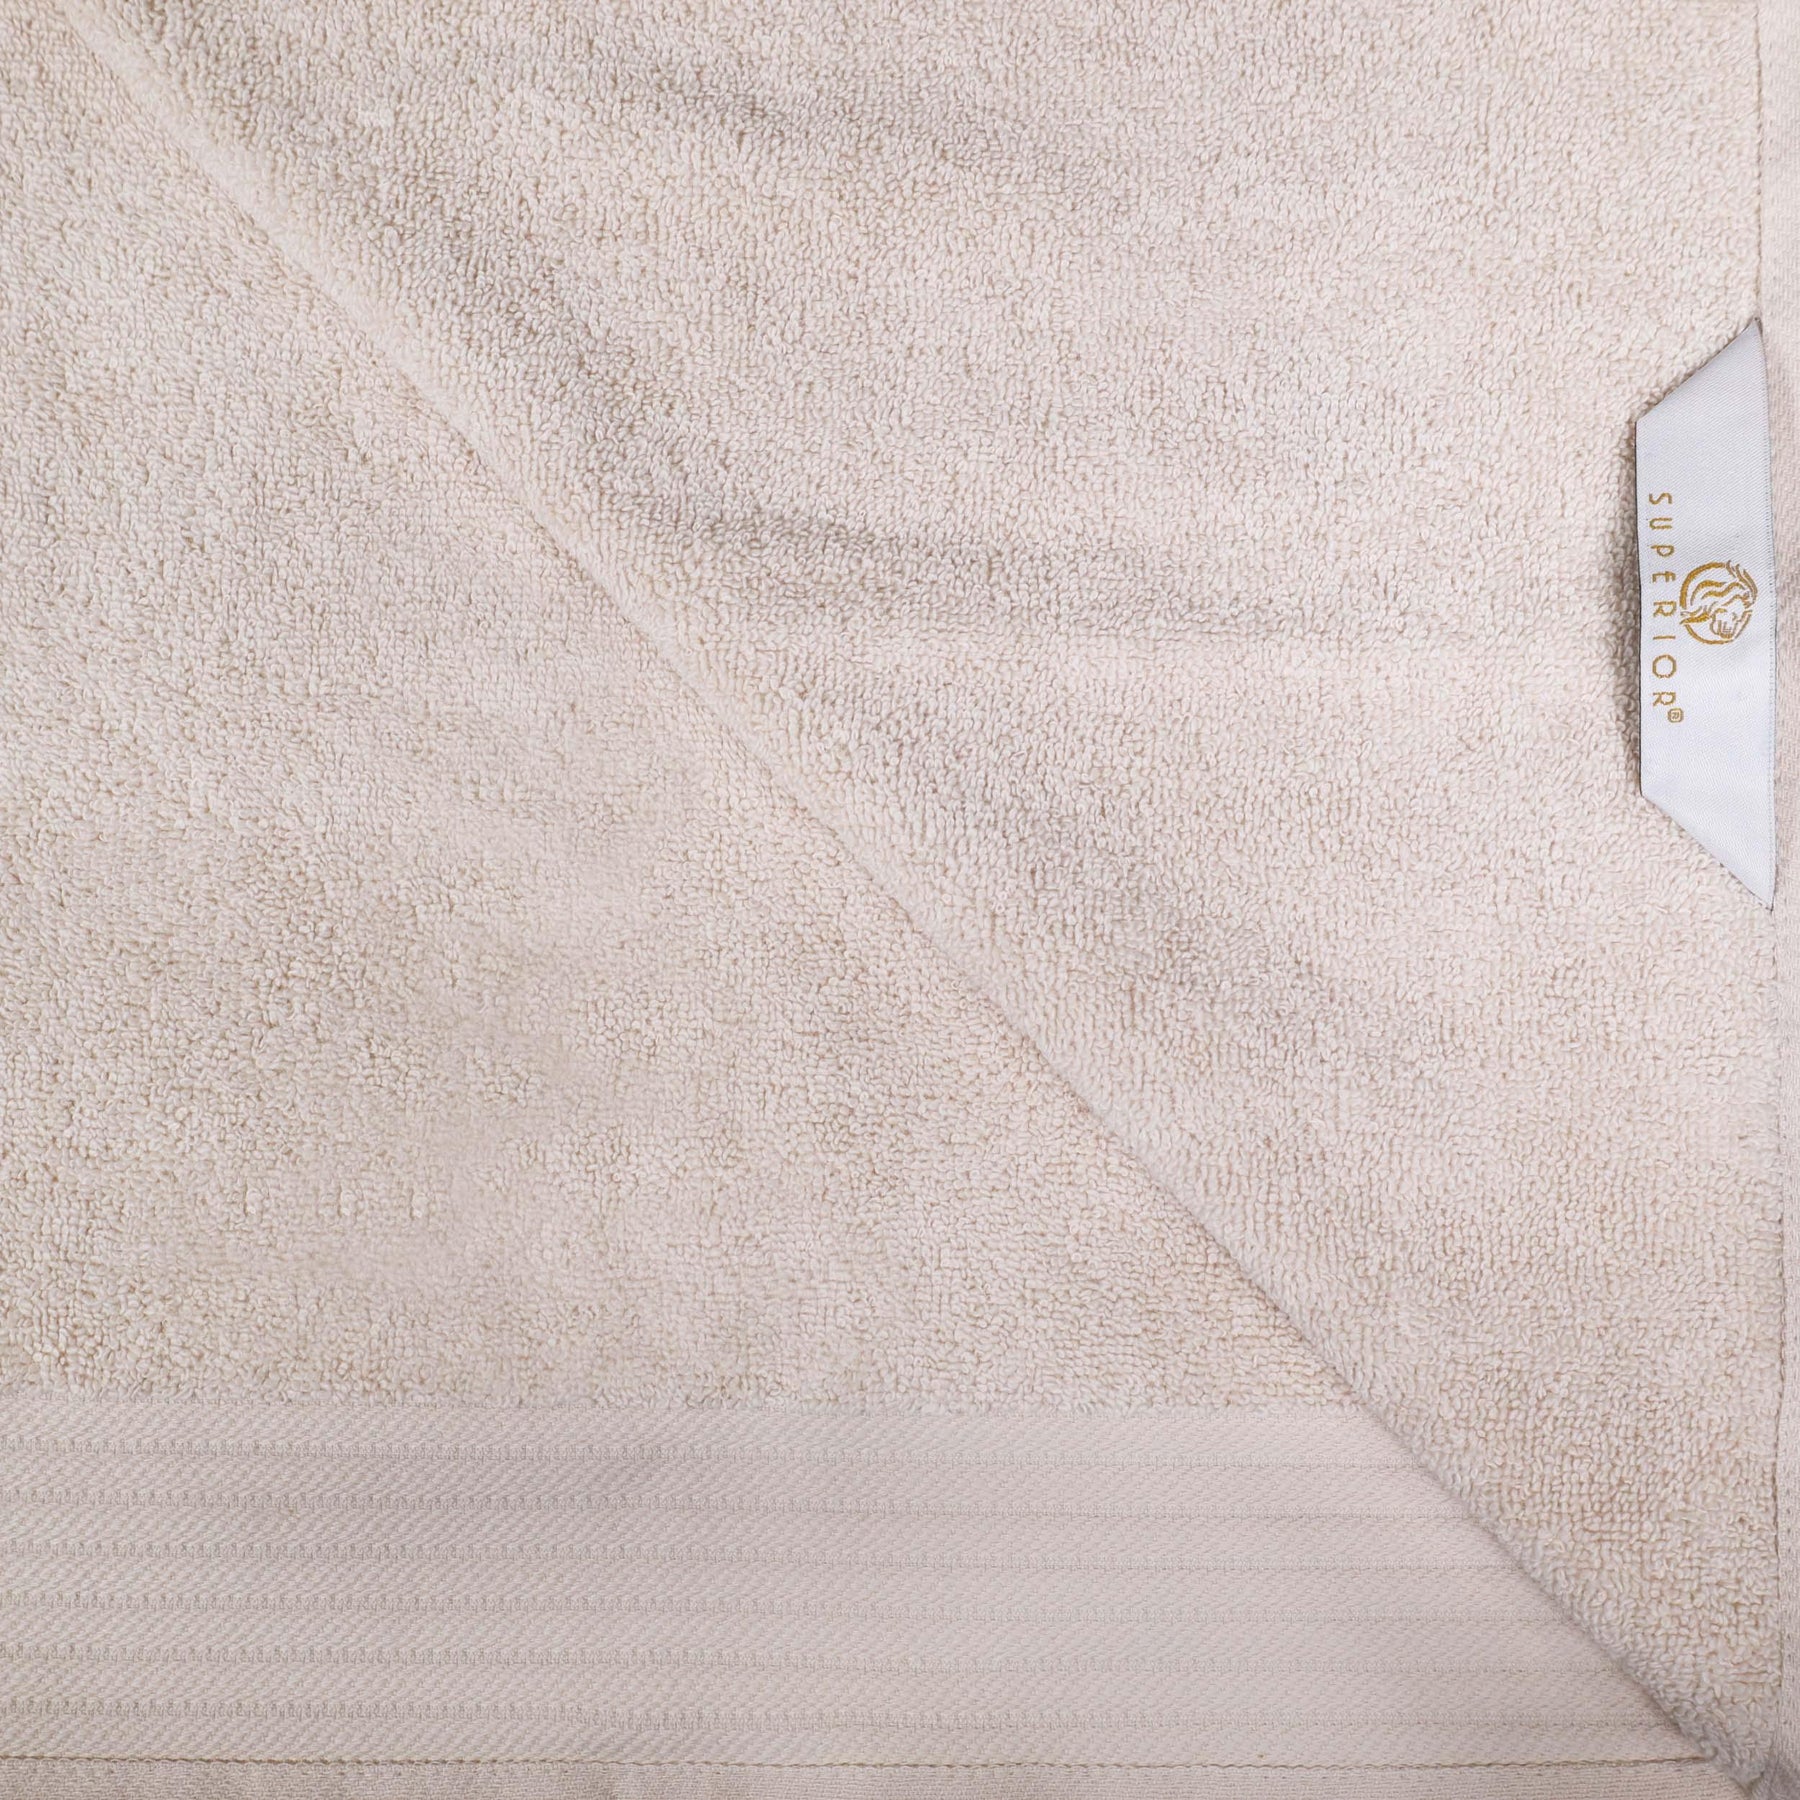 Premium Turkish Cotton Jacquard Herringbone and Solid 6-Piece Hand Towel Set -  Ivory